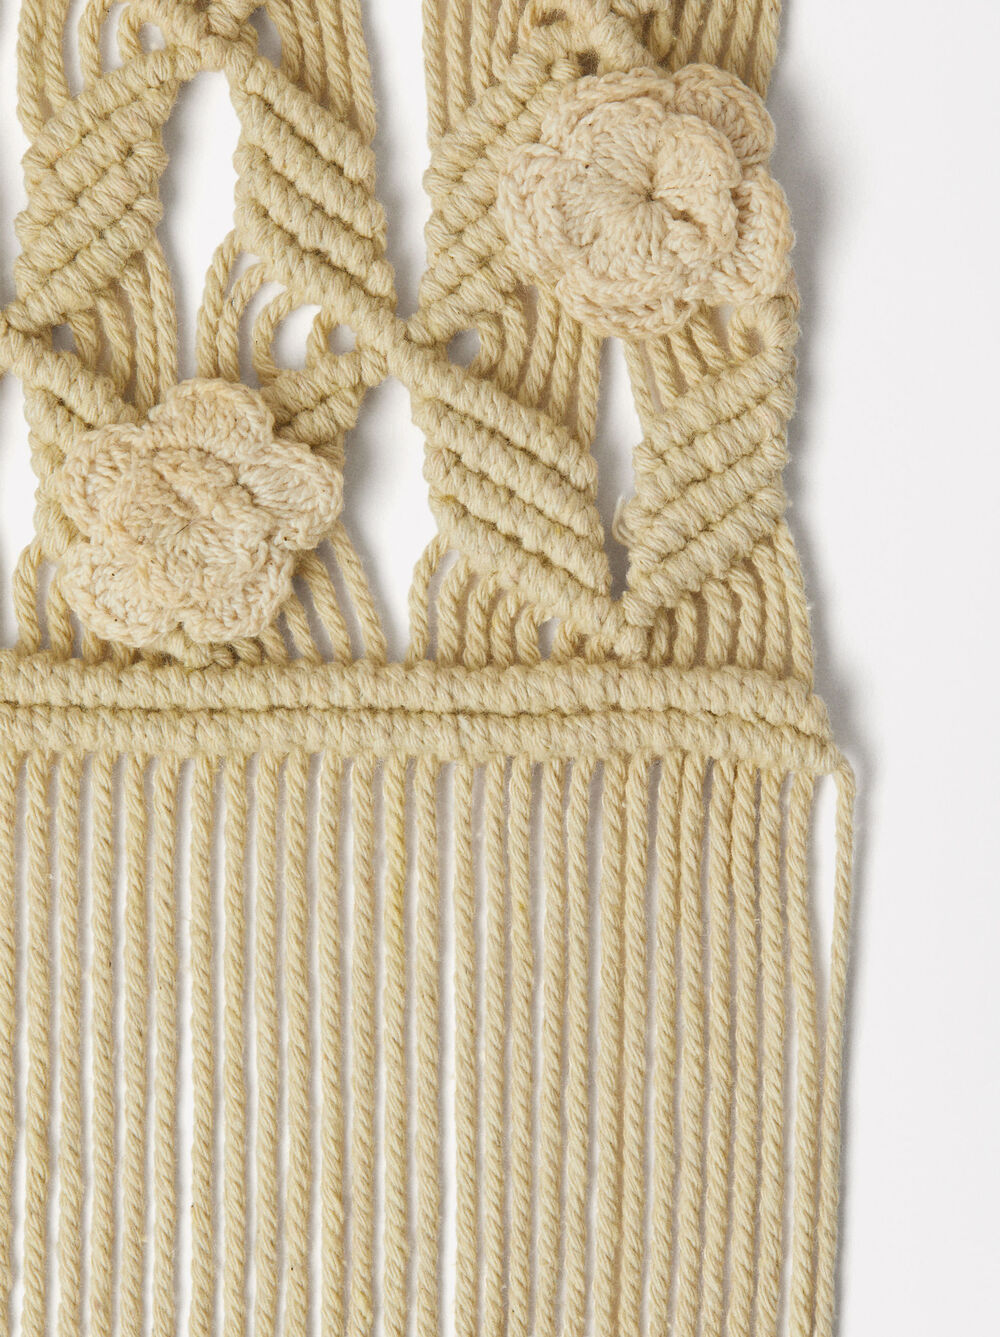 Exclusivo Online - Collar De Madera Crochet